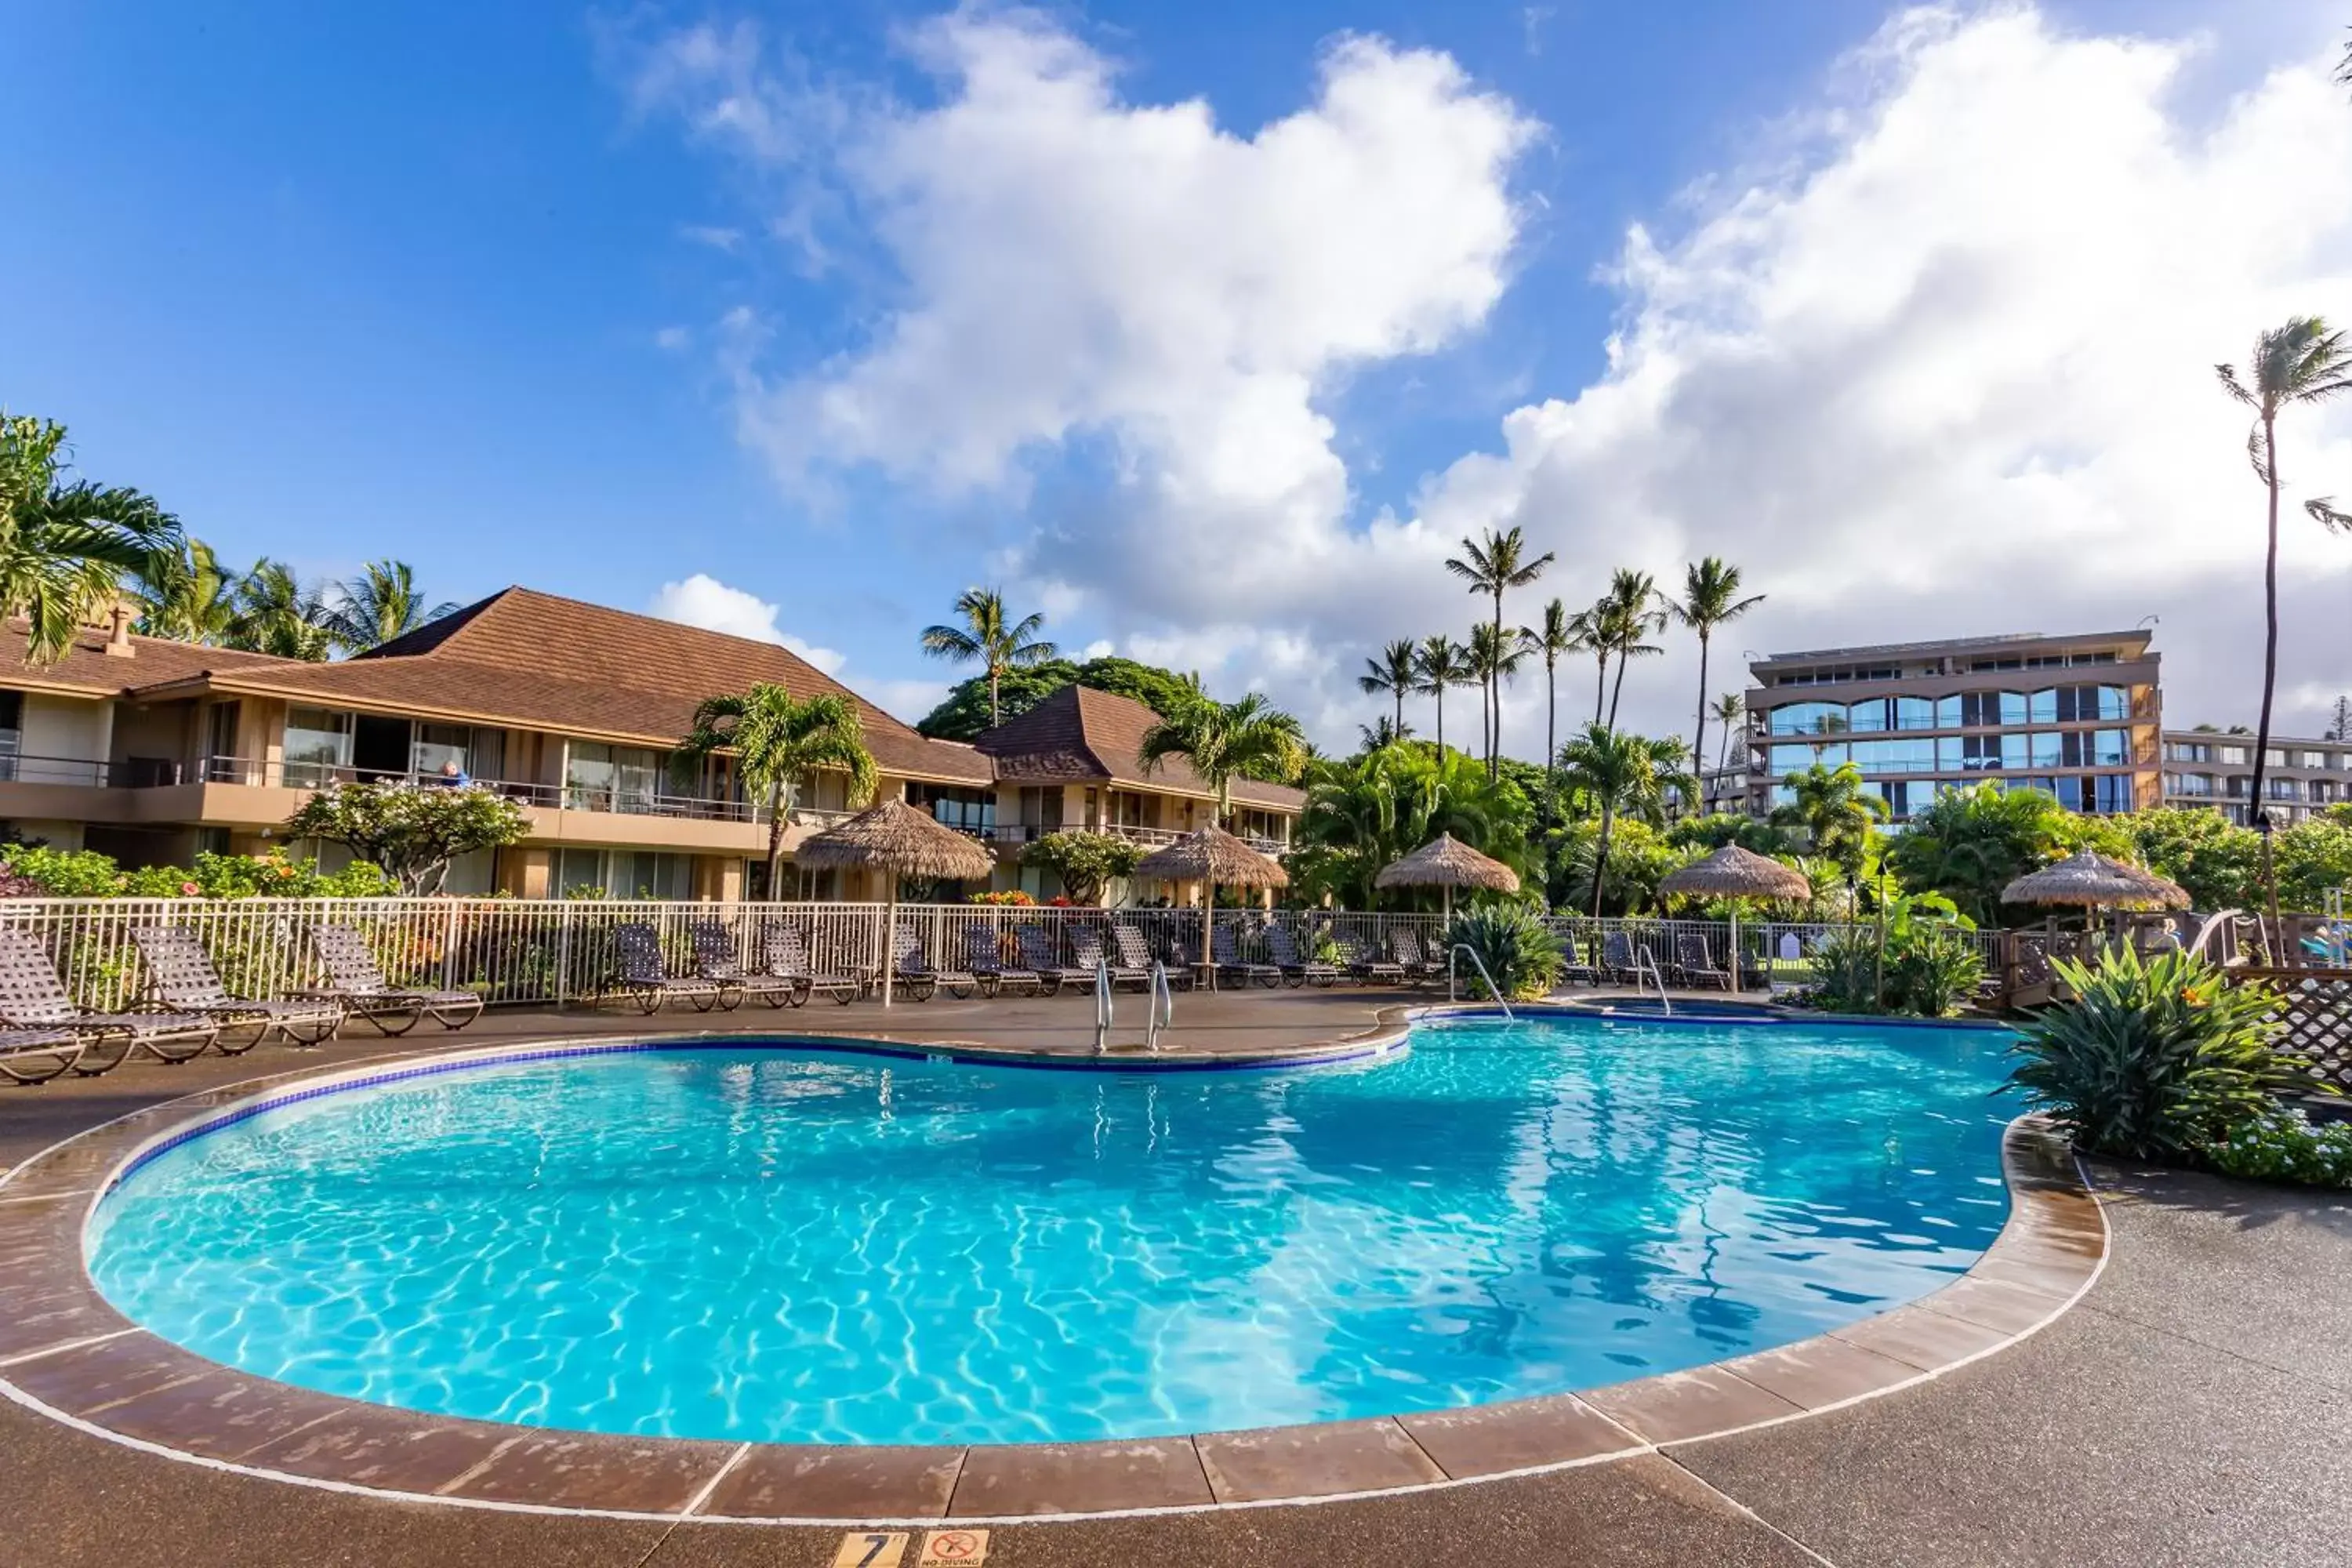 Property building, Swimming Pool in Aston Maui Kaanapali Villas